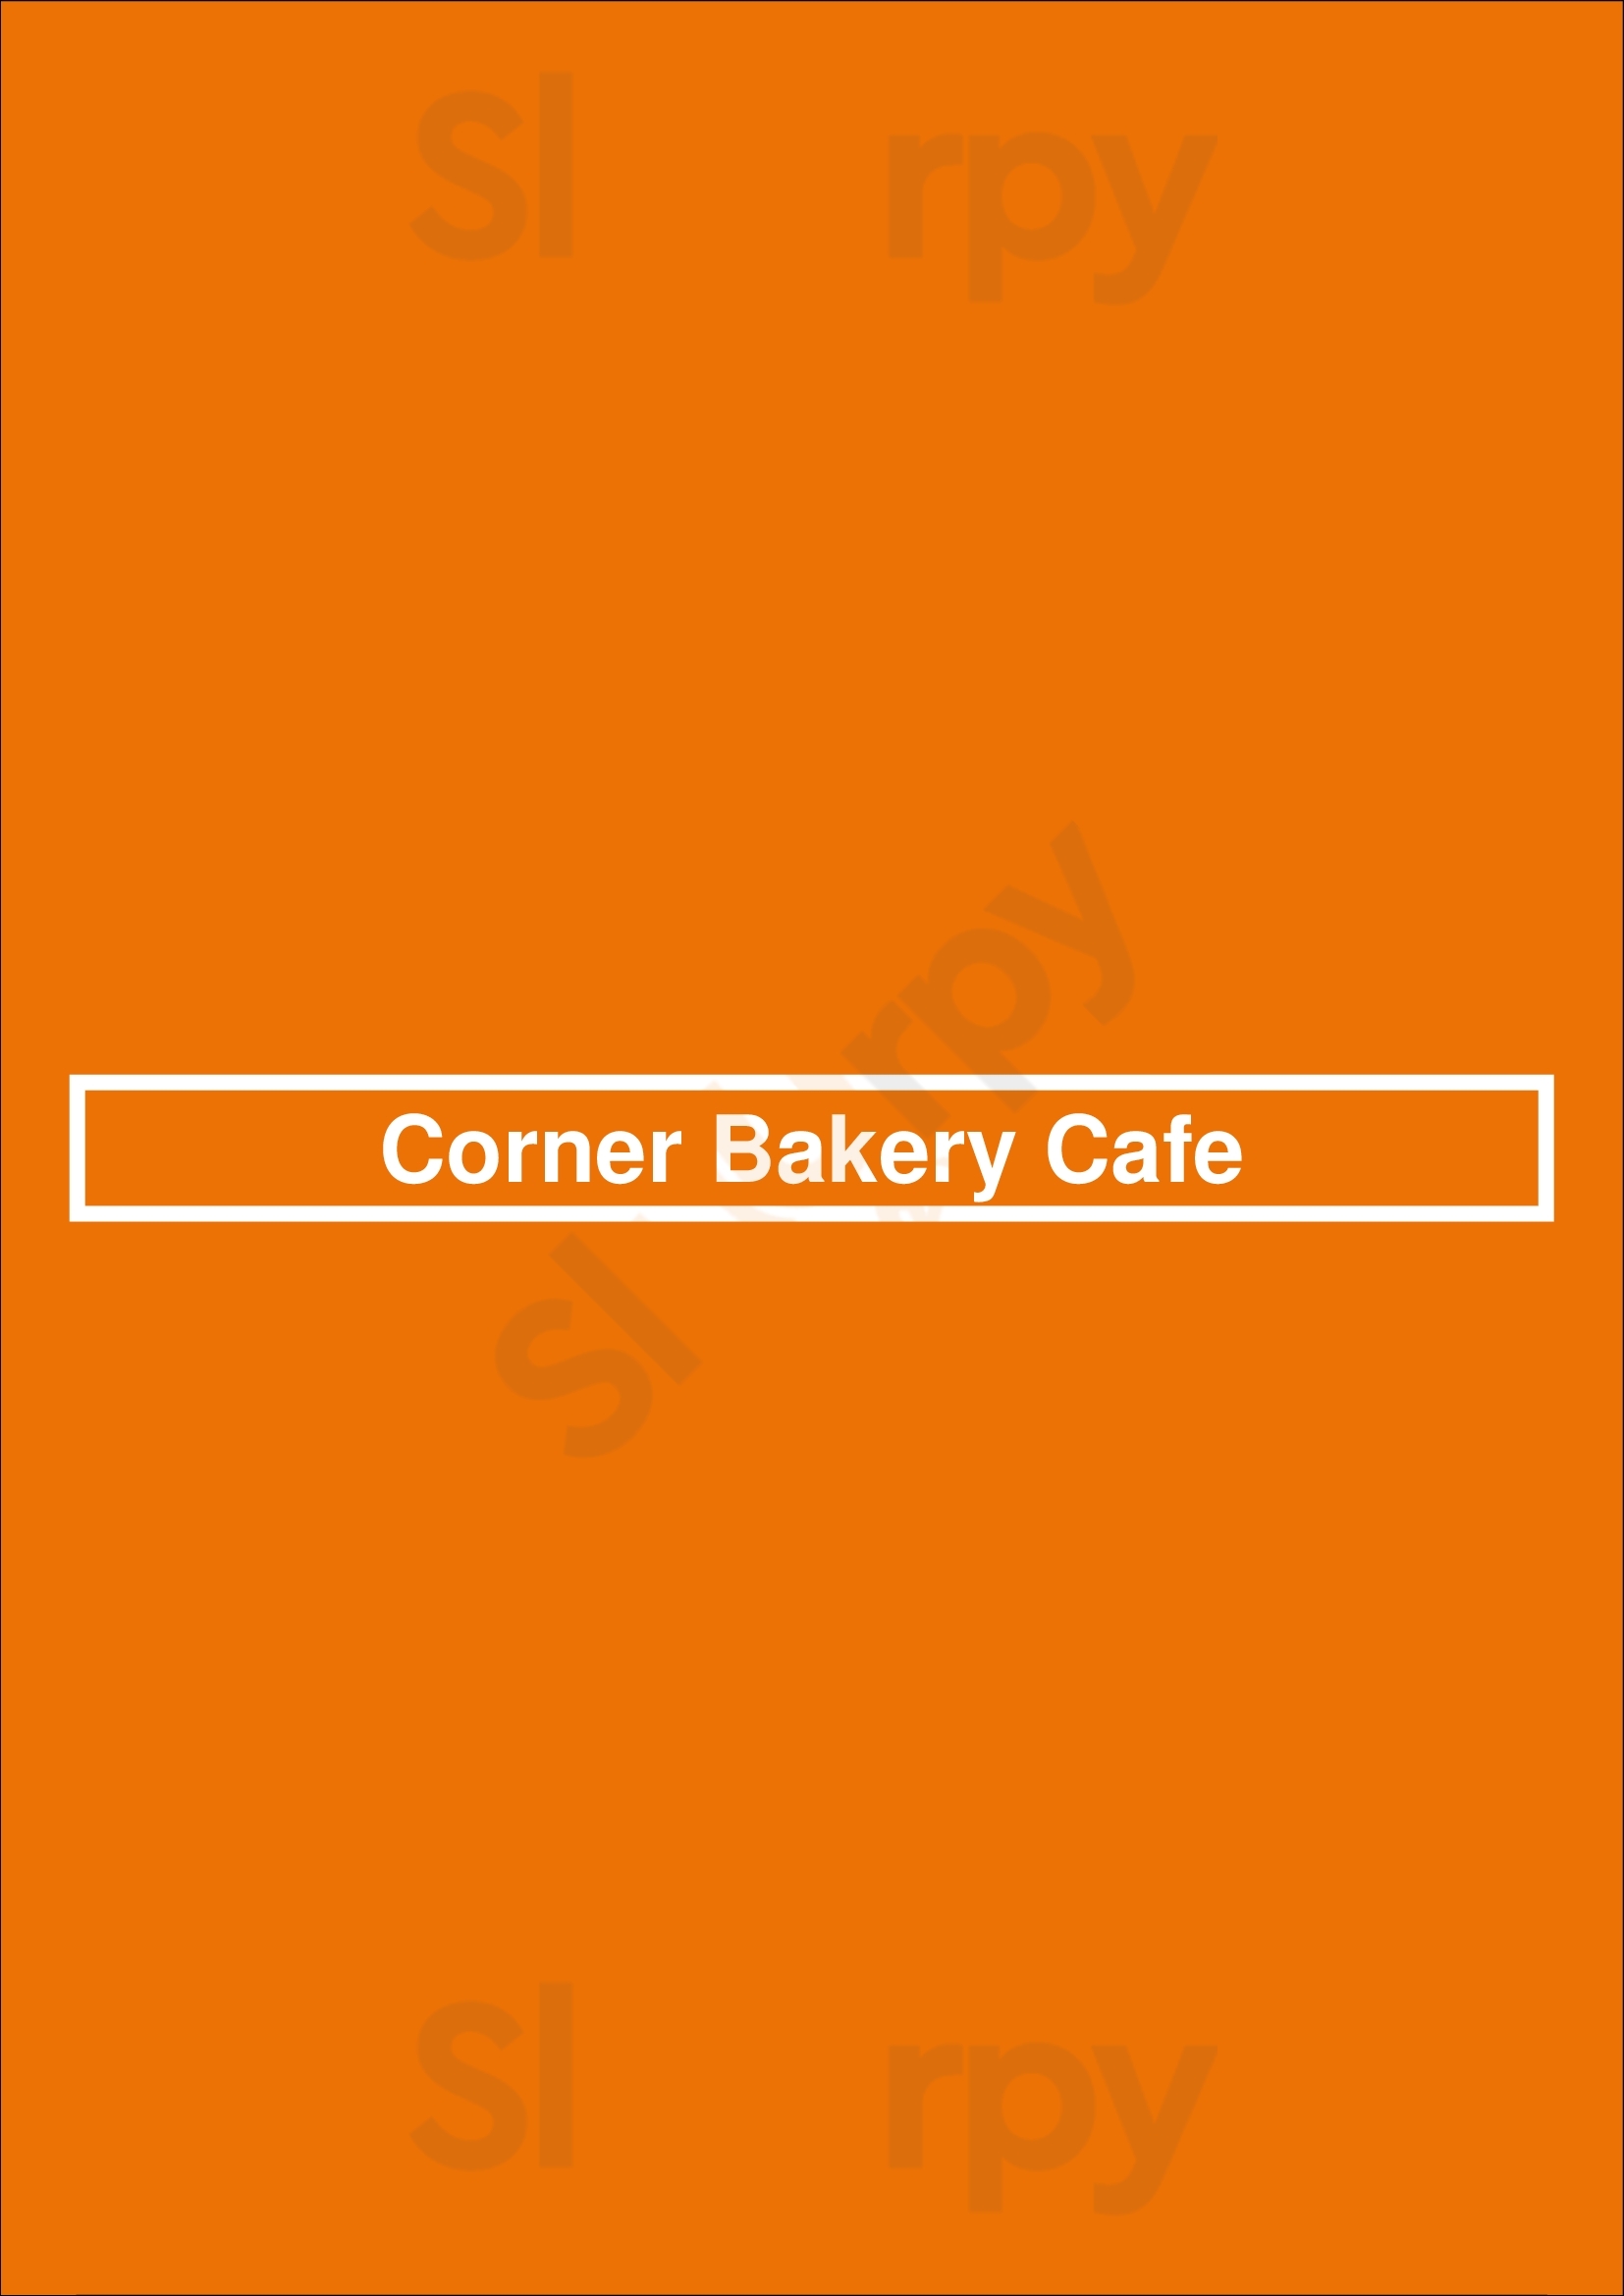 Corner Bakery Cafe Irvine Menu - 1